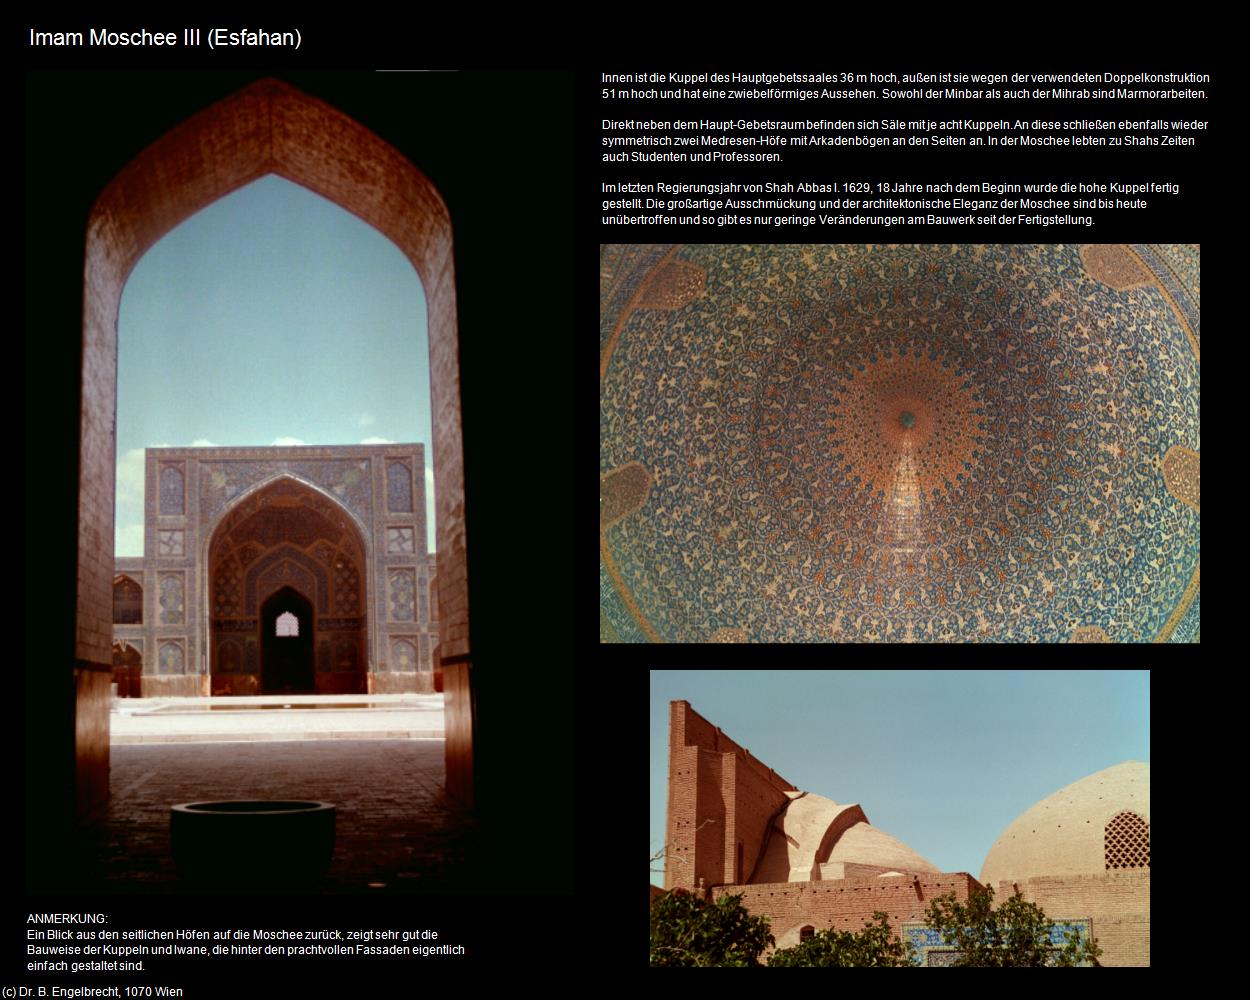 Imam Moschee III (Esfahan) in Iran